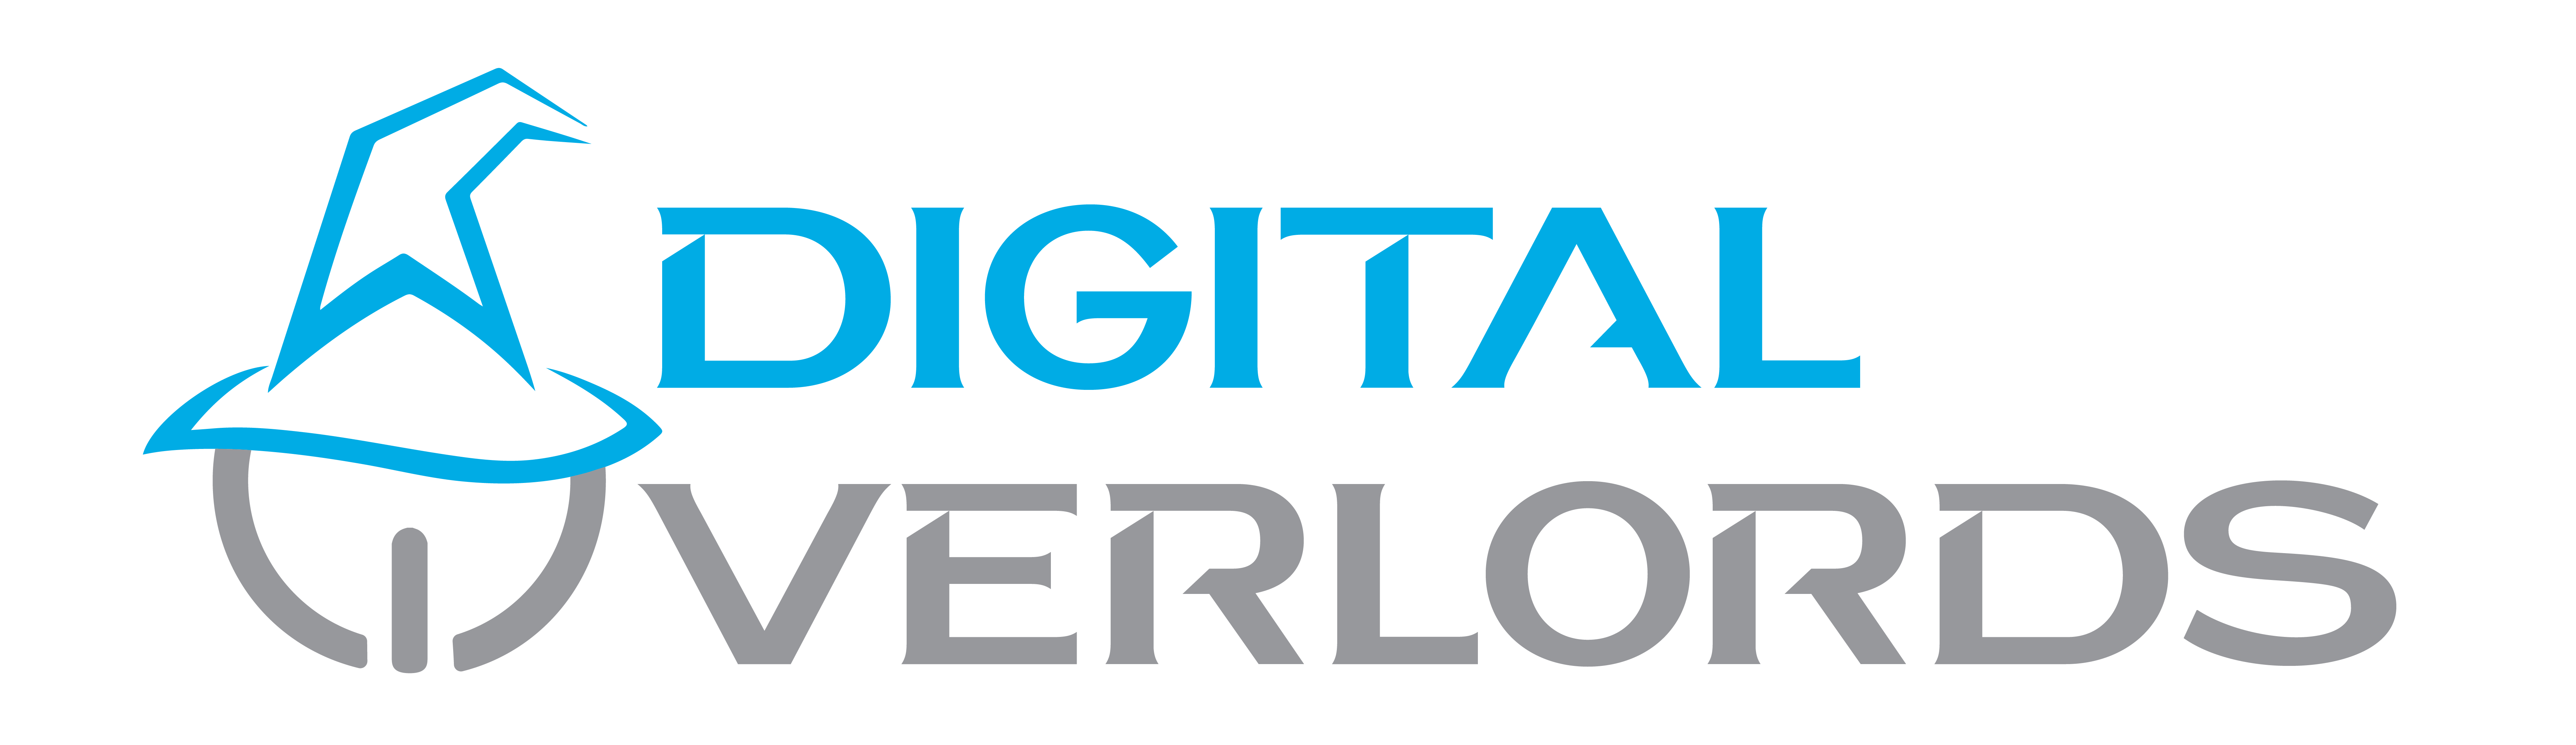 Logo for Digital Overlords